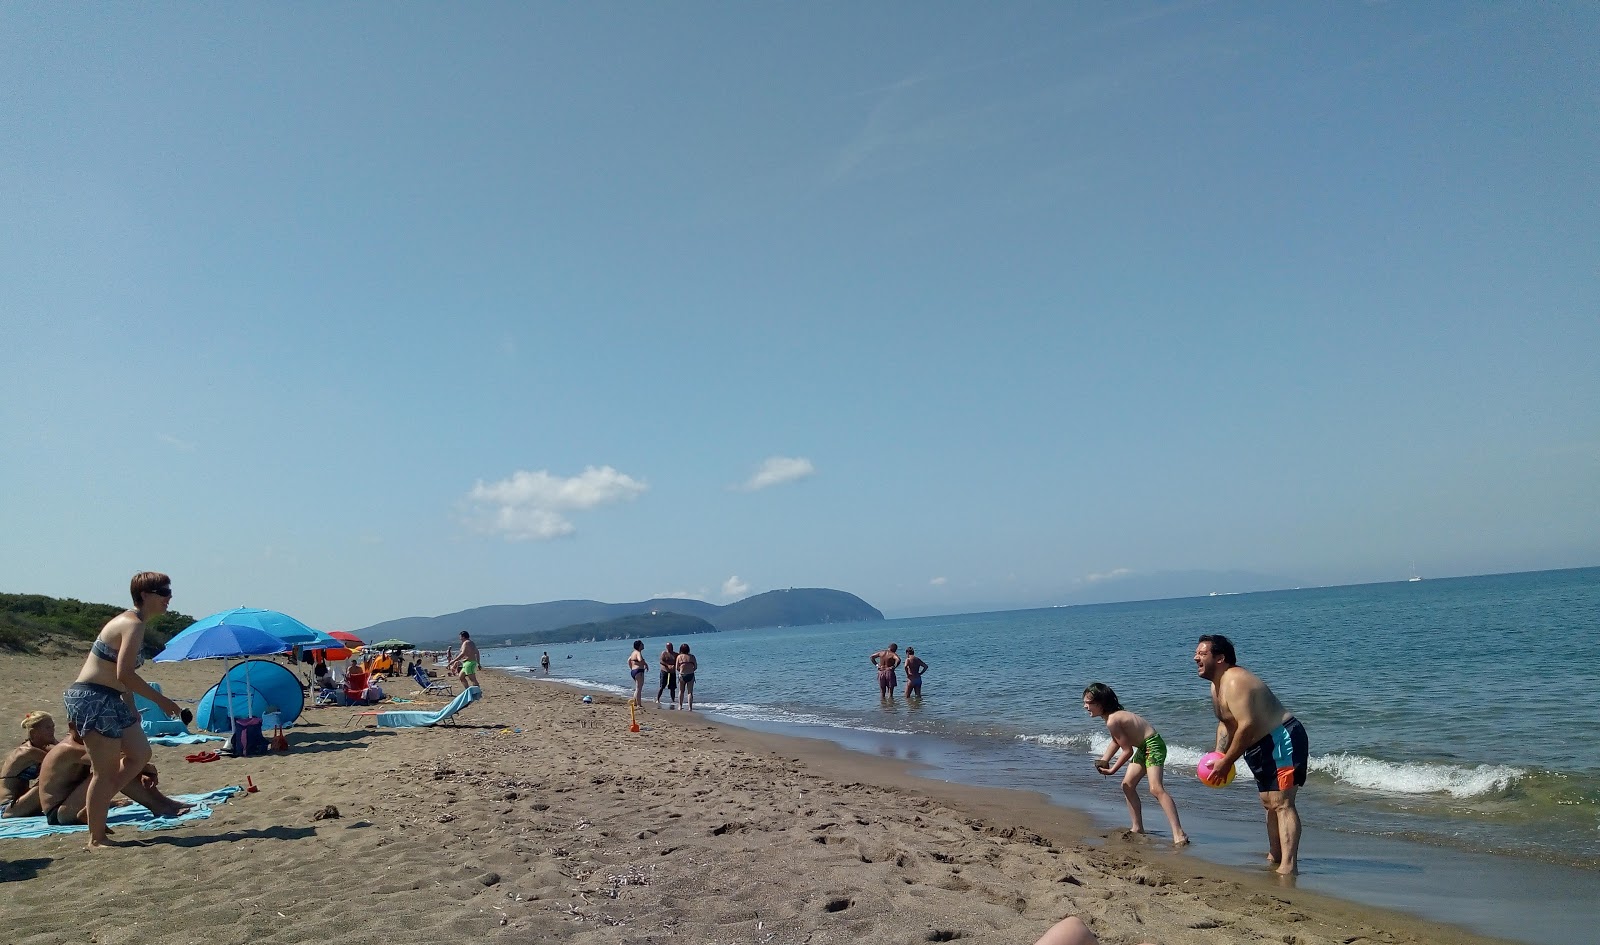 Fotografie cu Spiaggia di Rimigliano II cu o suprafață de apa albastra